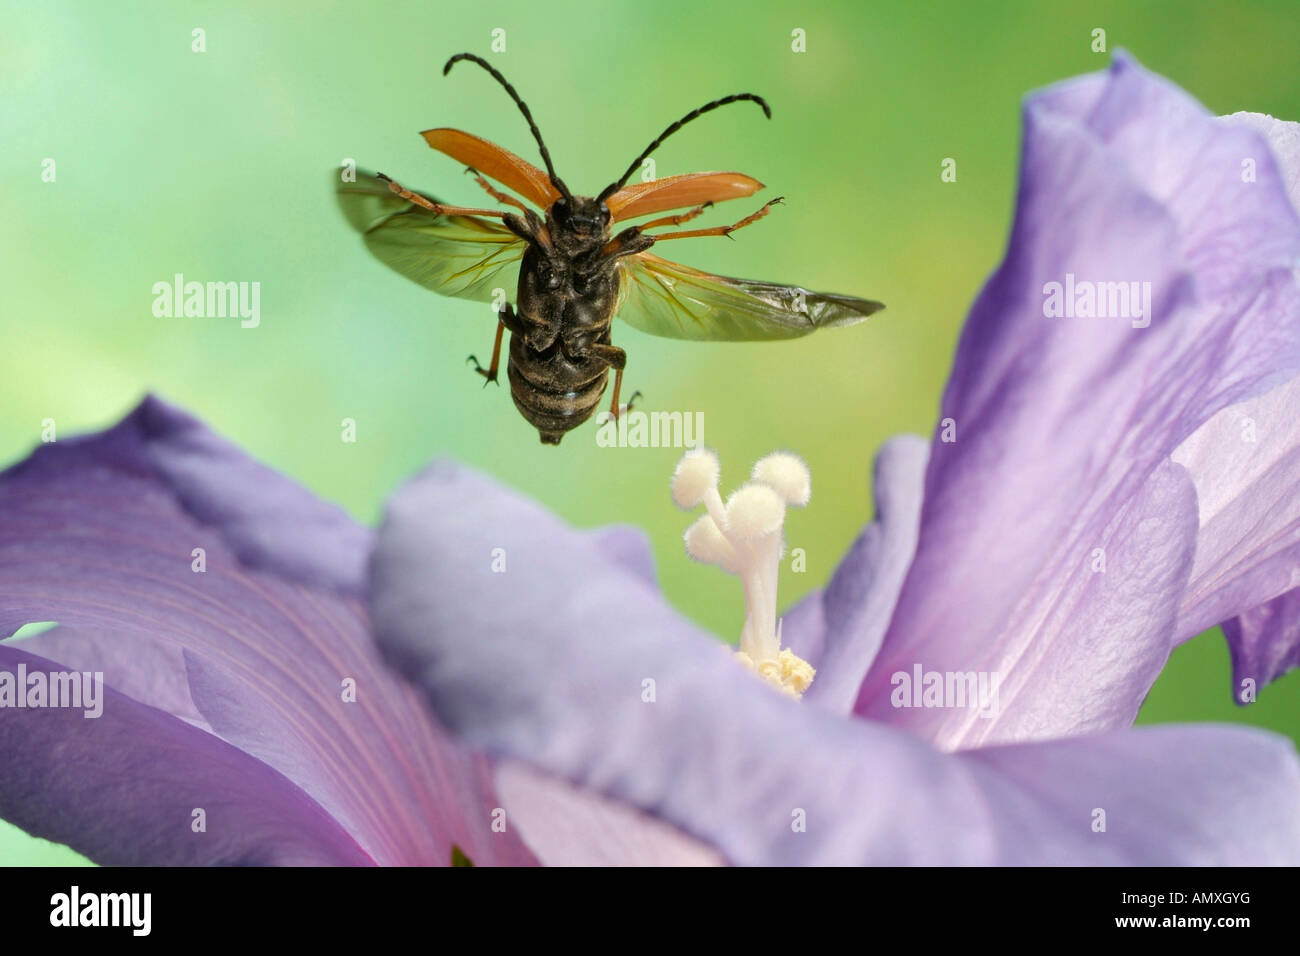 Close-up of Longhorn beetle (Leptura rubra) hovering over flower Stock Photo